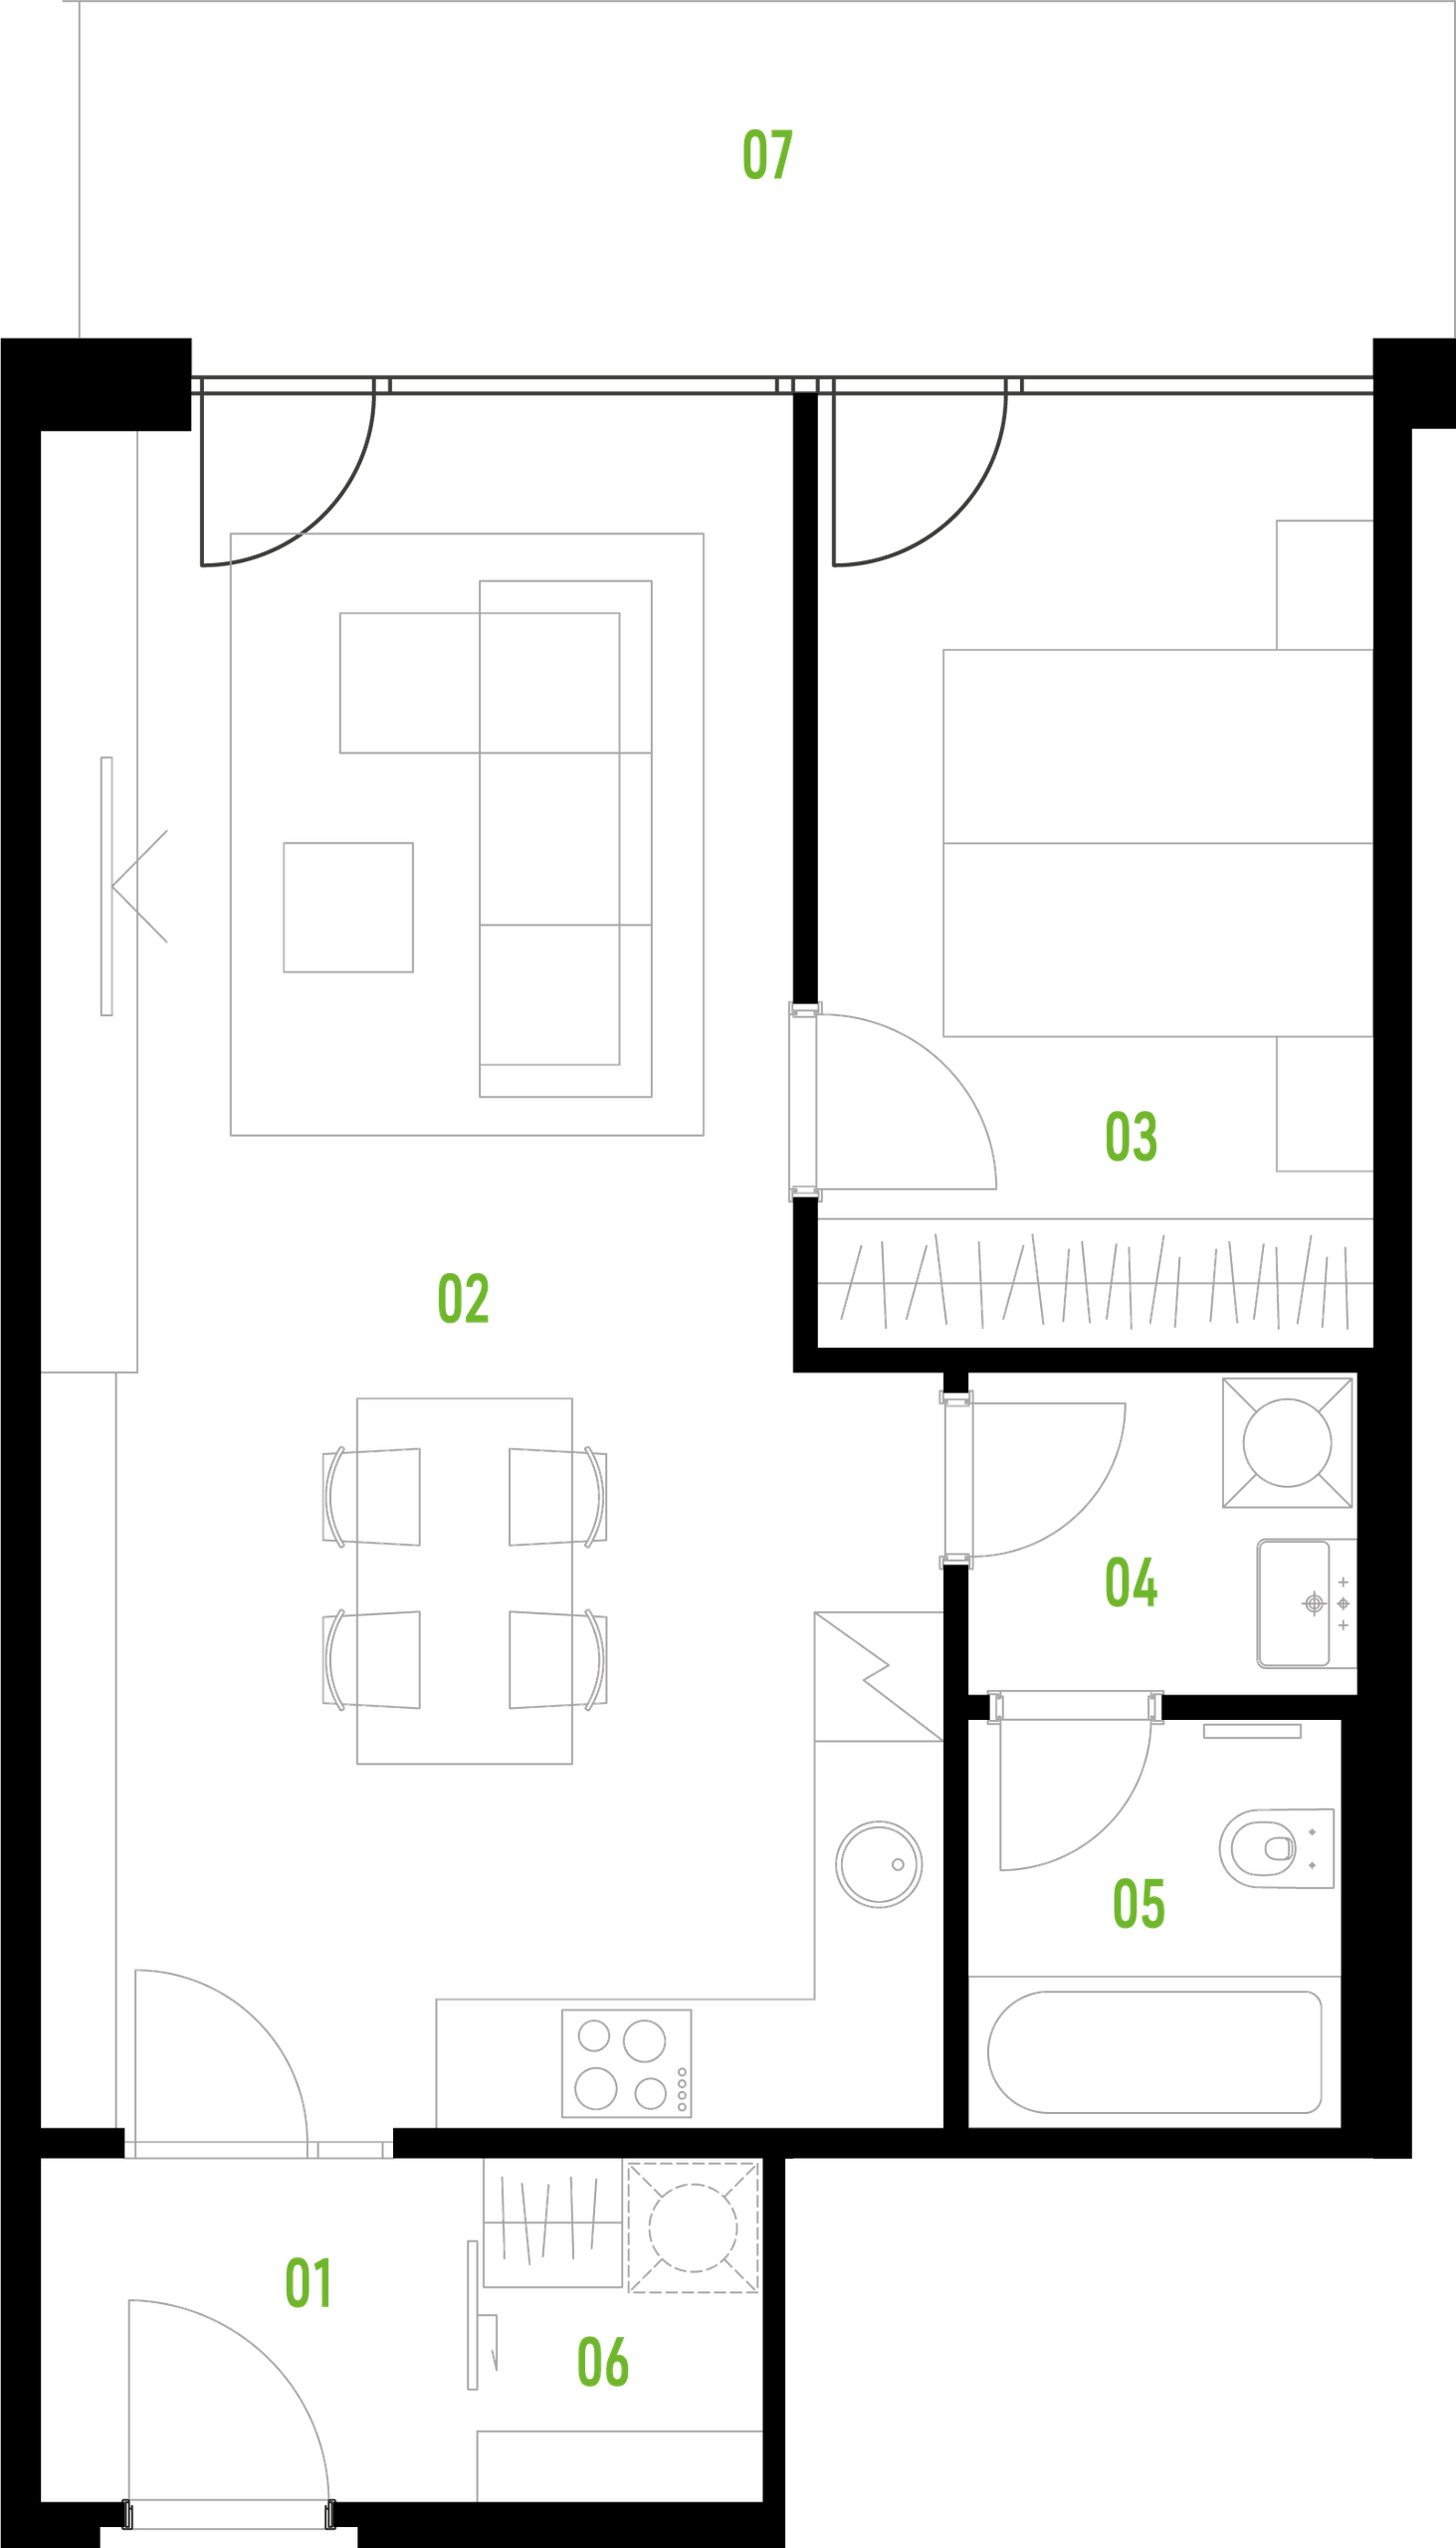 B13 floor plan